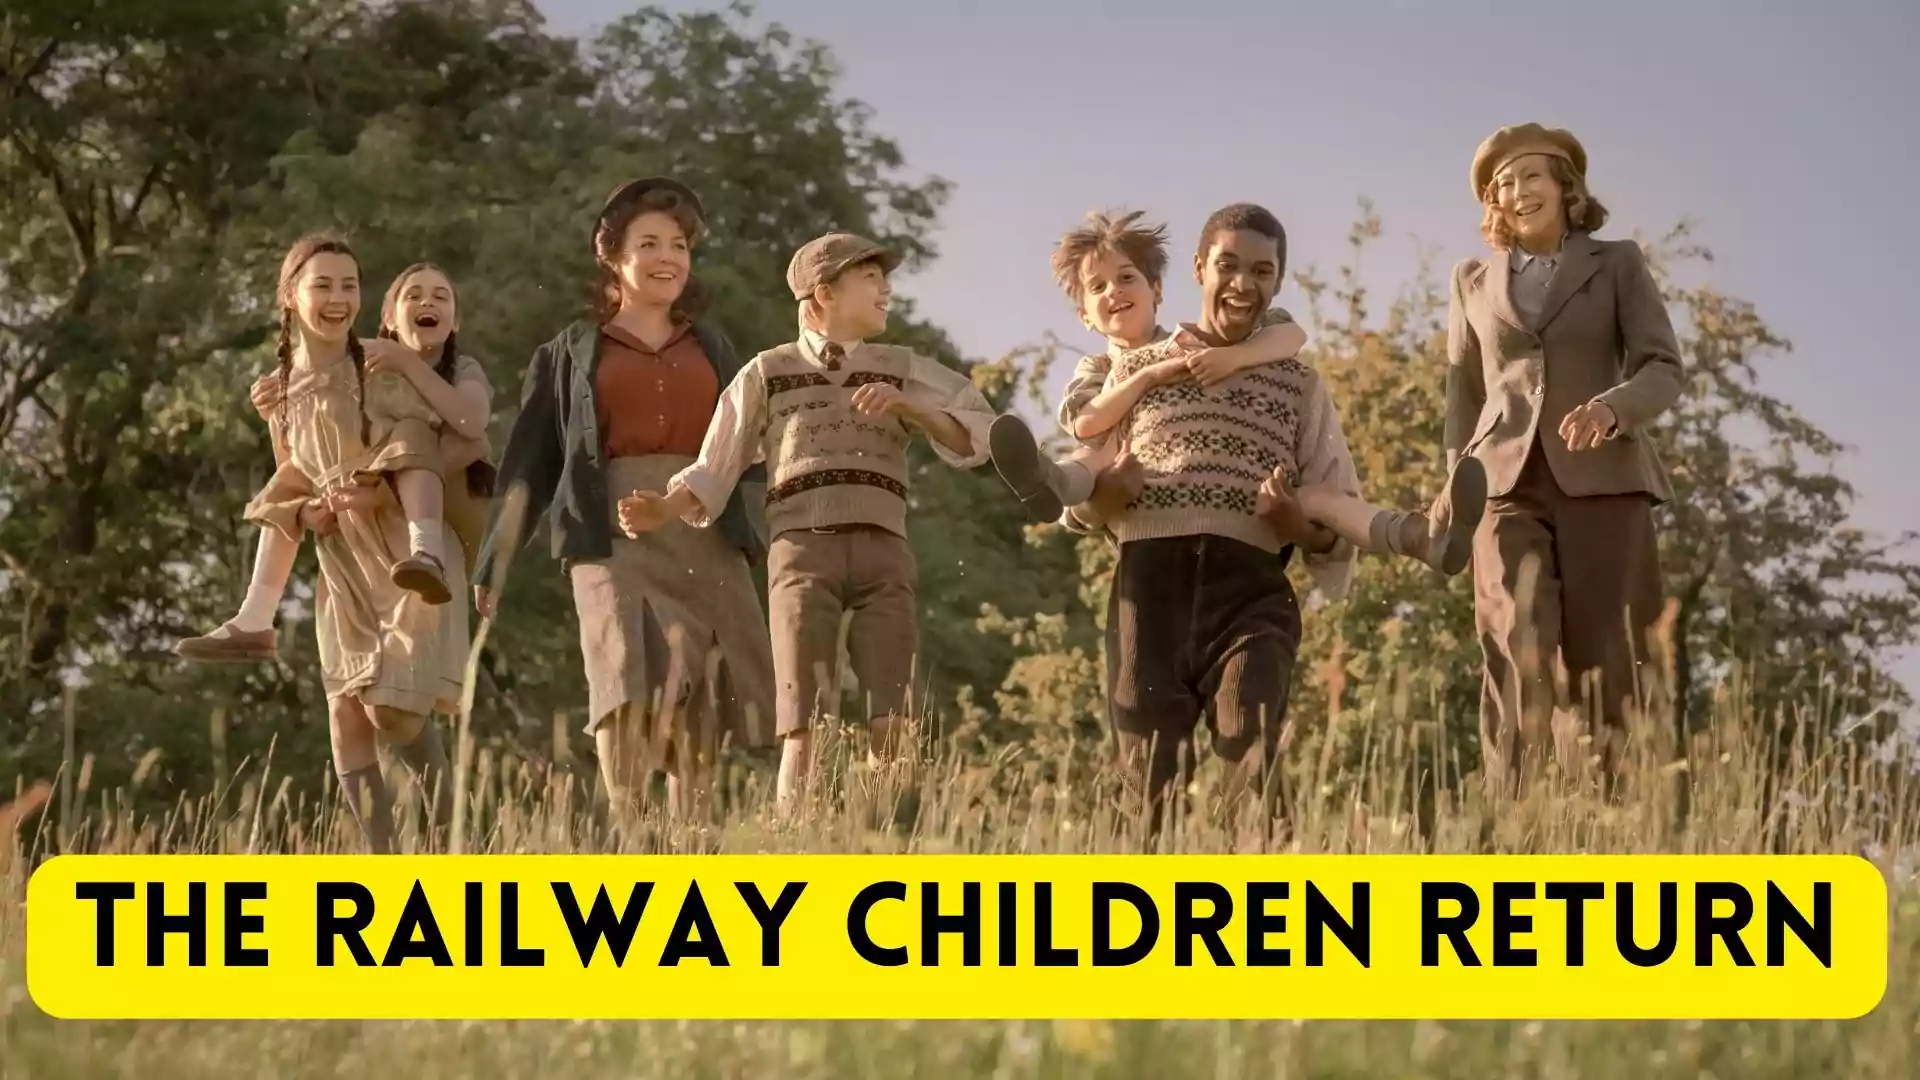 The Railway Children Return Release Date, Cast, storyline, Trailer Breakdown 2022. The Railway Children Return sequel to 1970 film The Railway Children